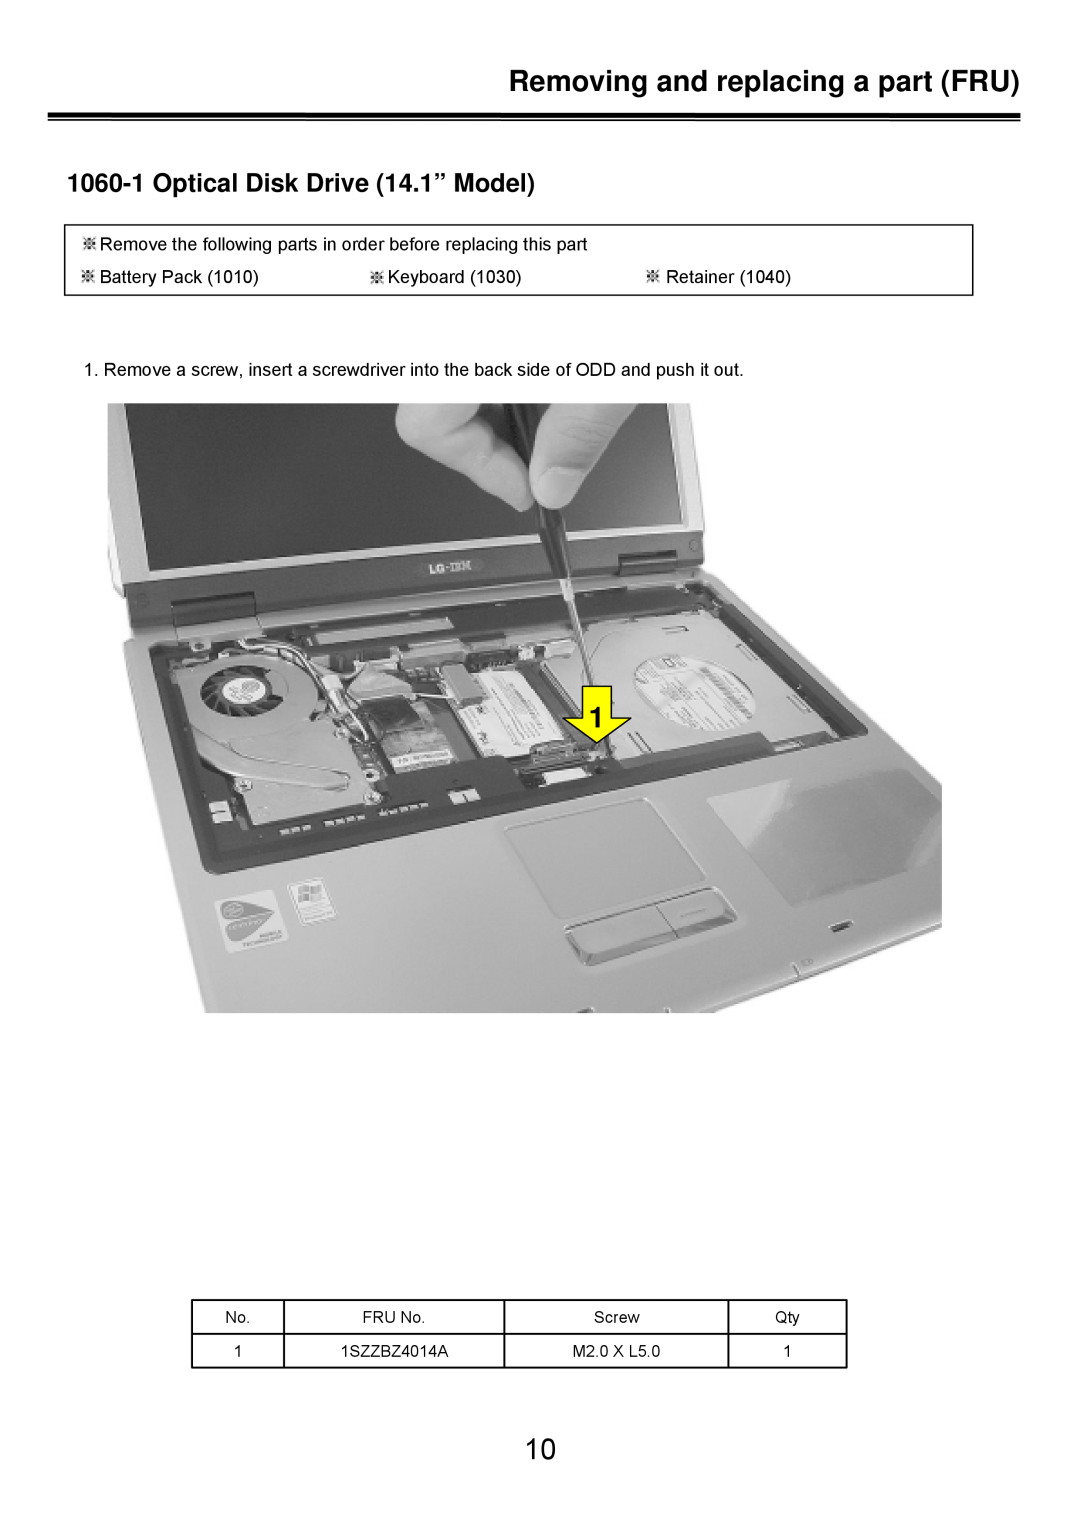 LG Electronics LS50 Optical Disk Drive 14.1” Model, 1SZZBZ4014A, M2.0 X L5.0, Removing and replacing a part FRU, Keyboard 